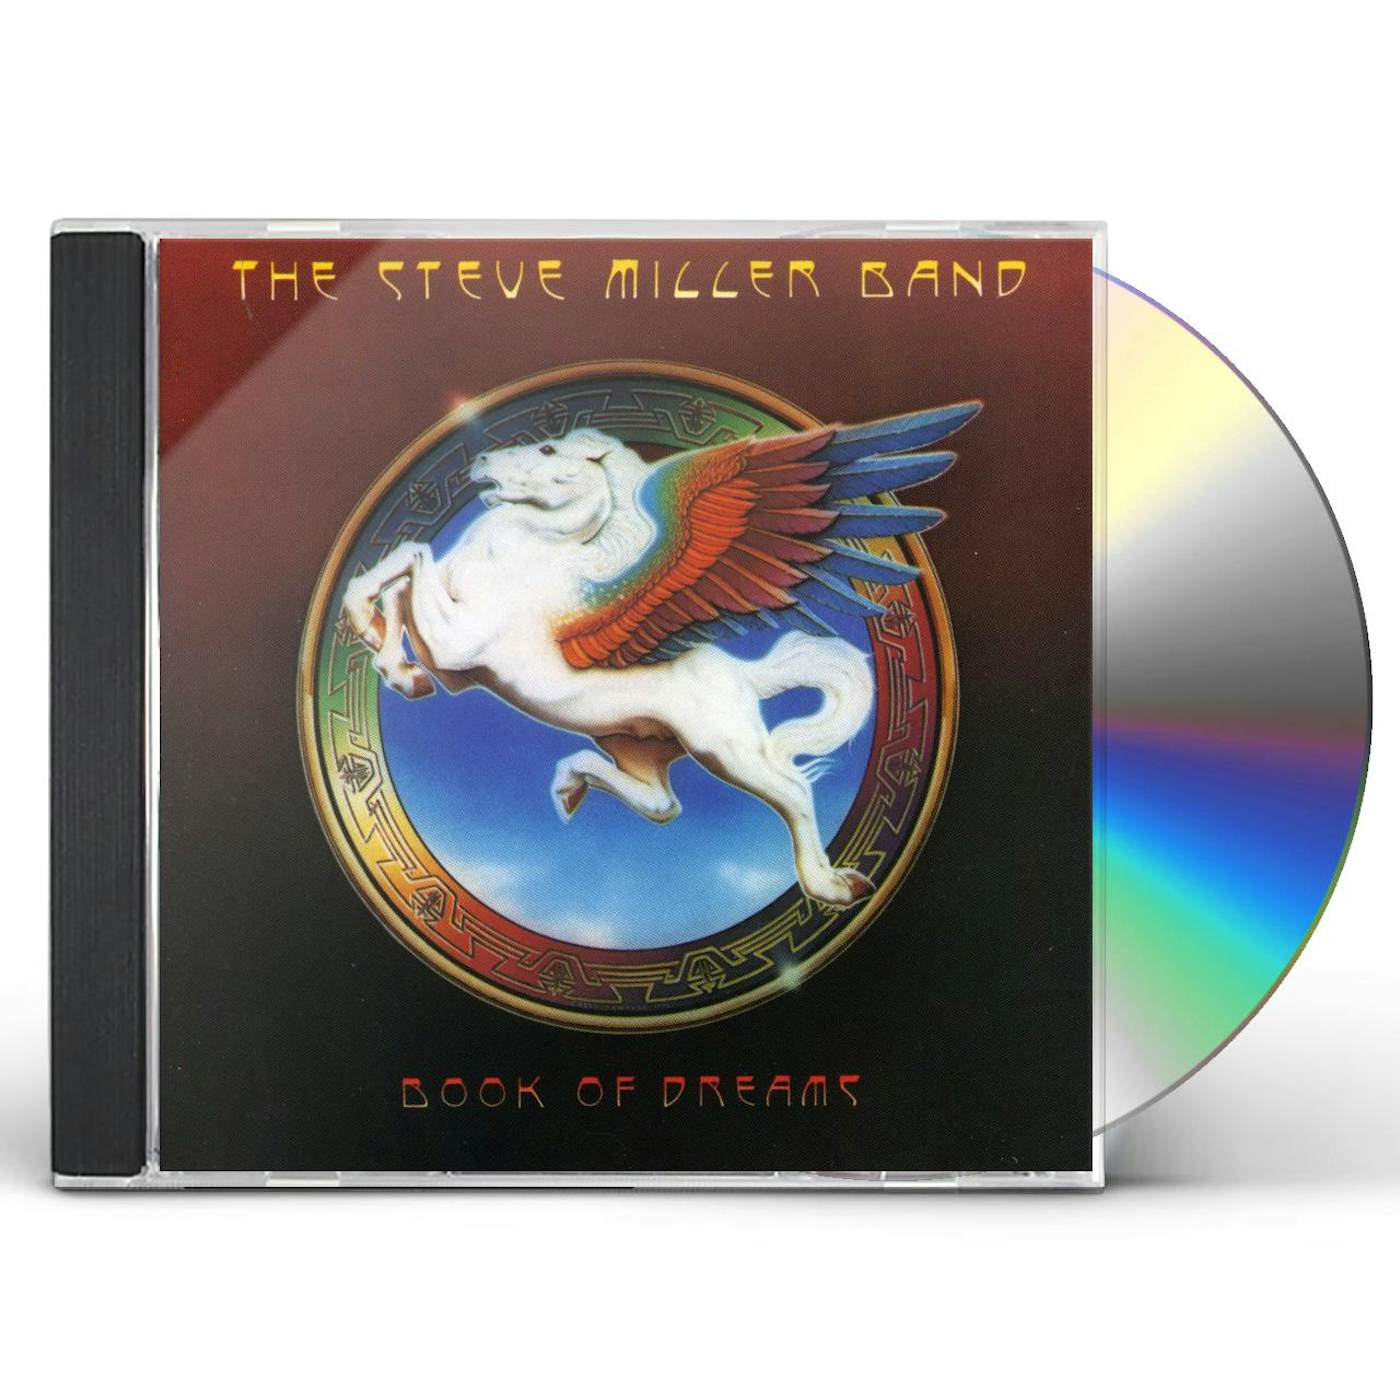 Steve Miller Band BOOK OF DREAMS CD